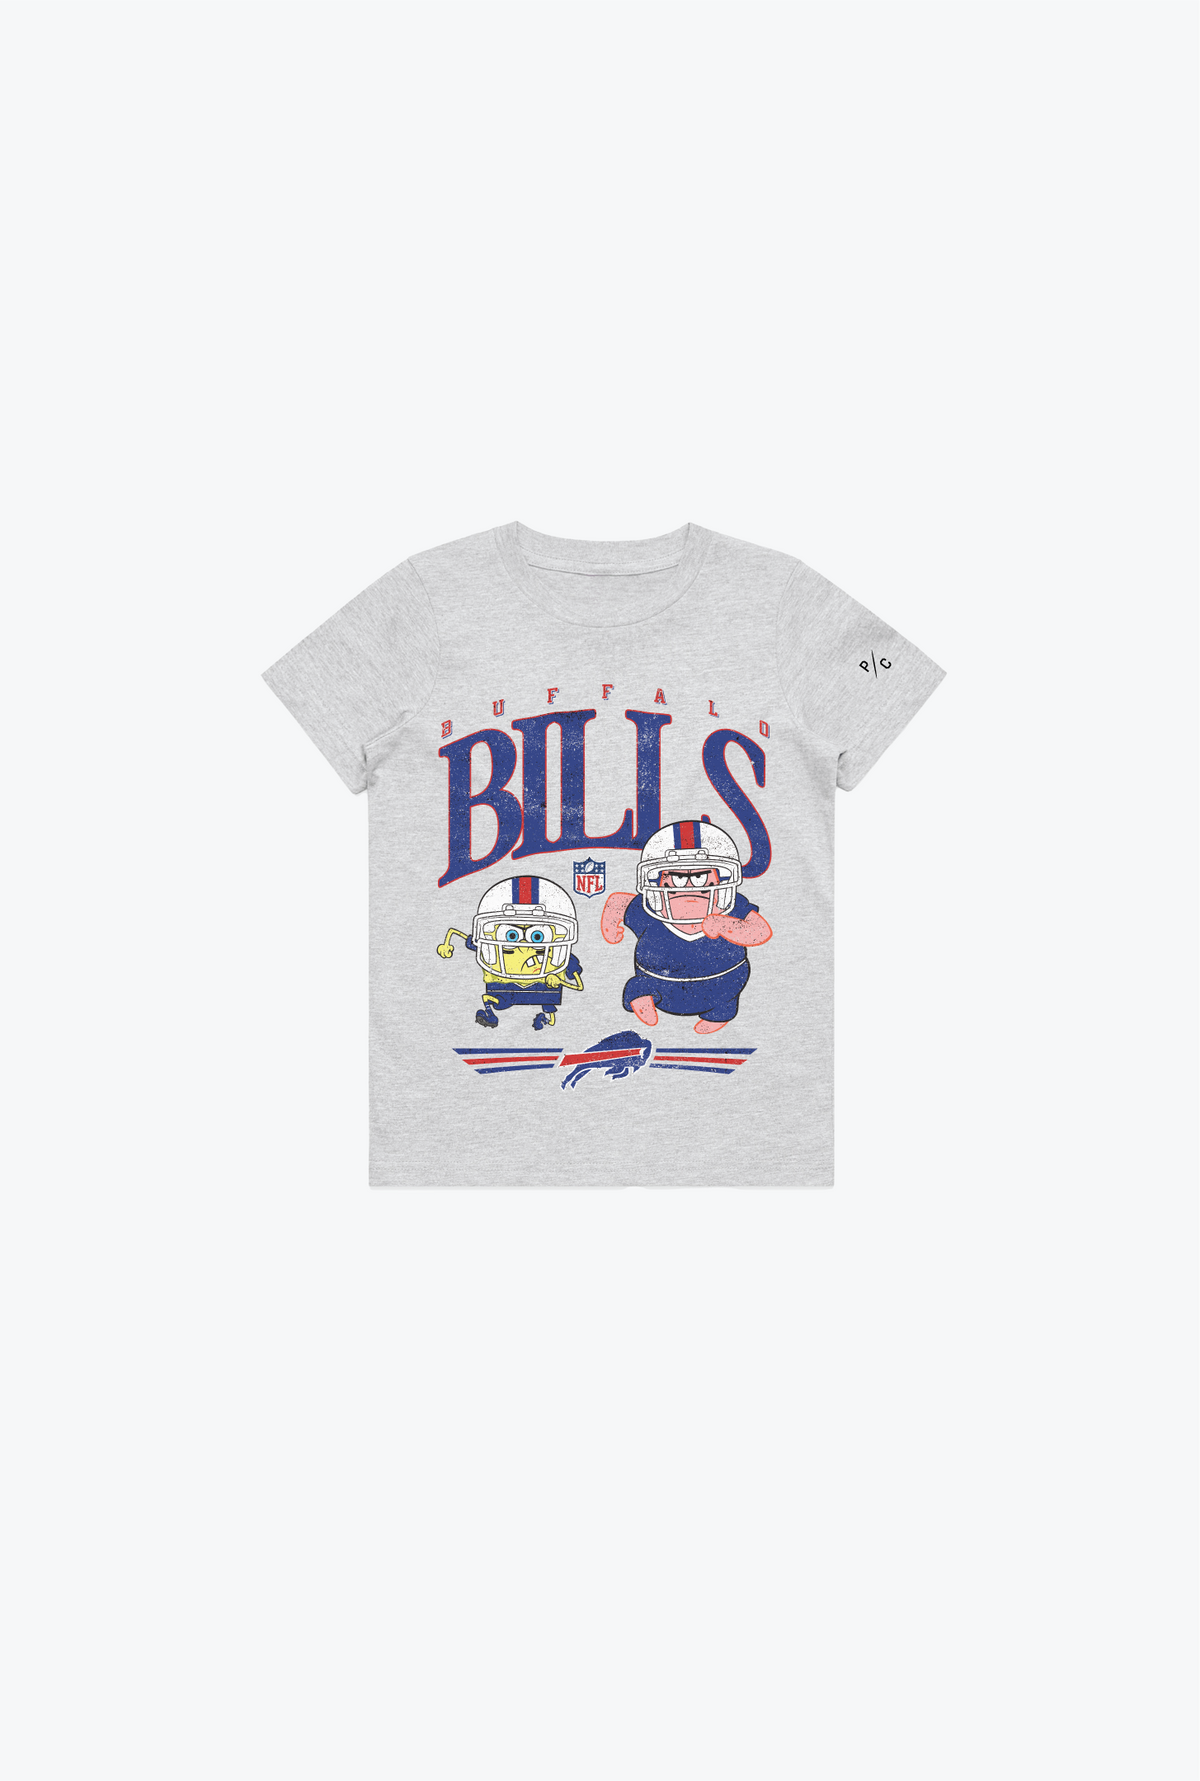 Spongebob & Patrick Rush Kids T-Shirt - Buffalo Bills